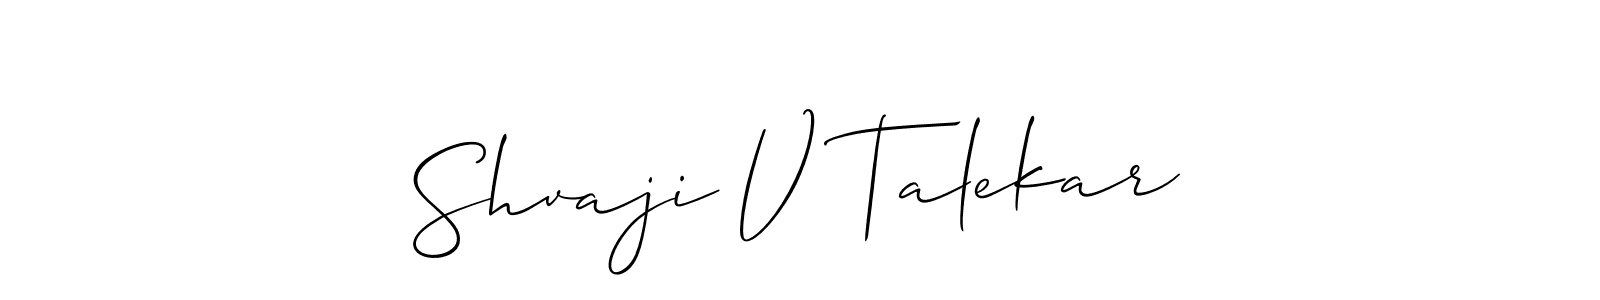 How to make Shvaji V Talekar signature? Allison_Script is a professional autograph style. Create handwritten signature for Shvaji V Talekar name. Shvaji V Talekar signature style 2 images and pictures png